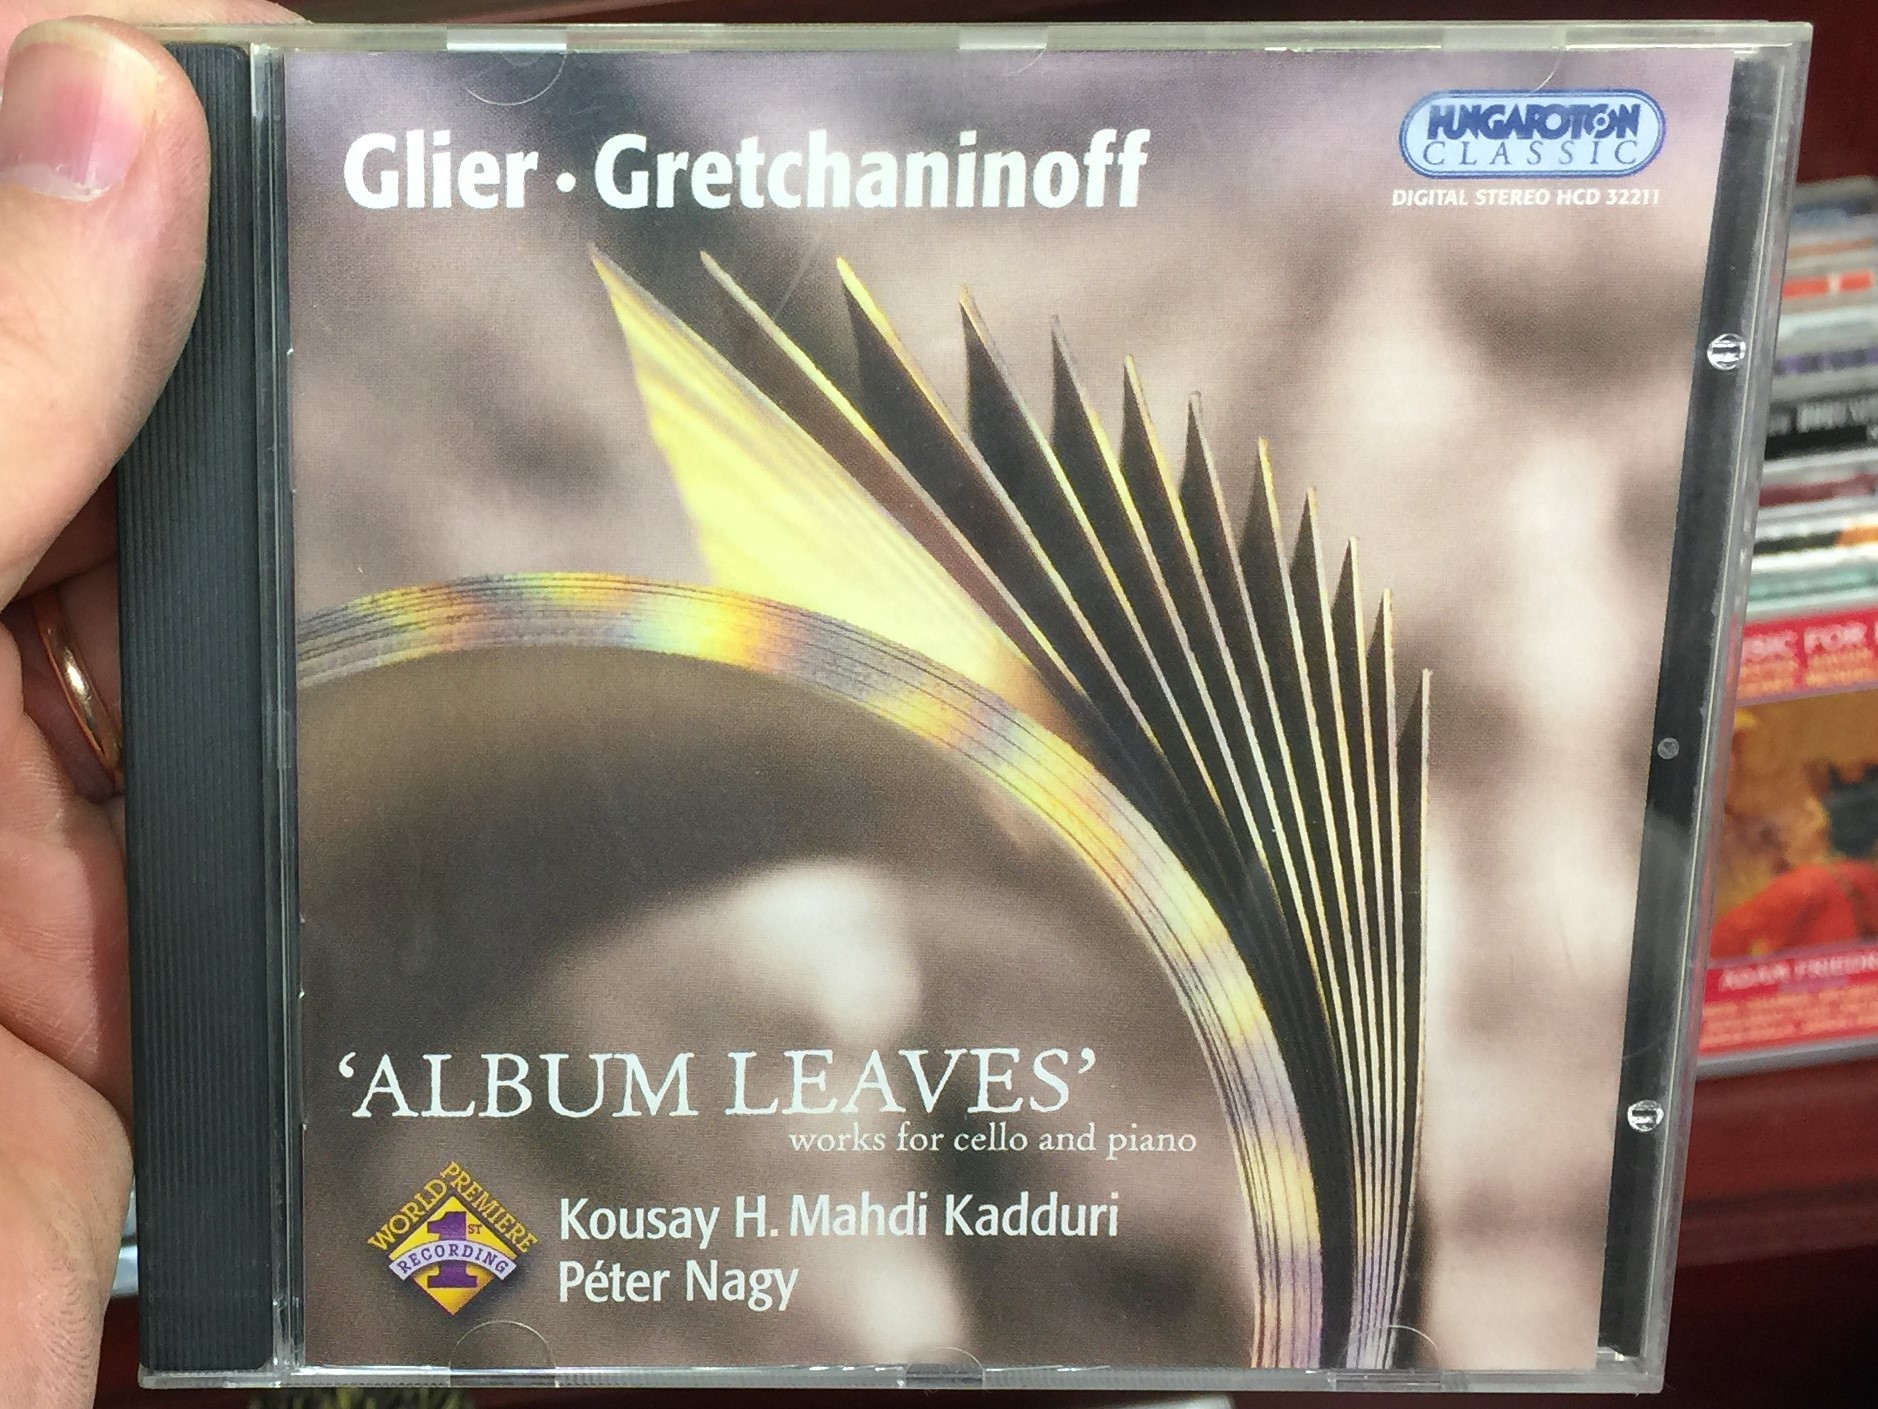 glier-gretchaninoff-album-leaves-works-for-cello-and-piano-kousay-h.-mahdi-kadduri-peter-nagy-hungaroton-classic-audio-cd-2004-stereo-hcd-32211-1-.jpg